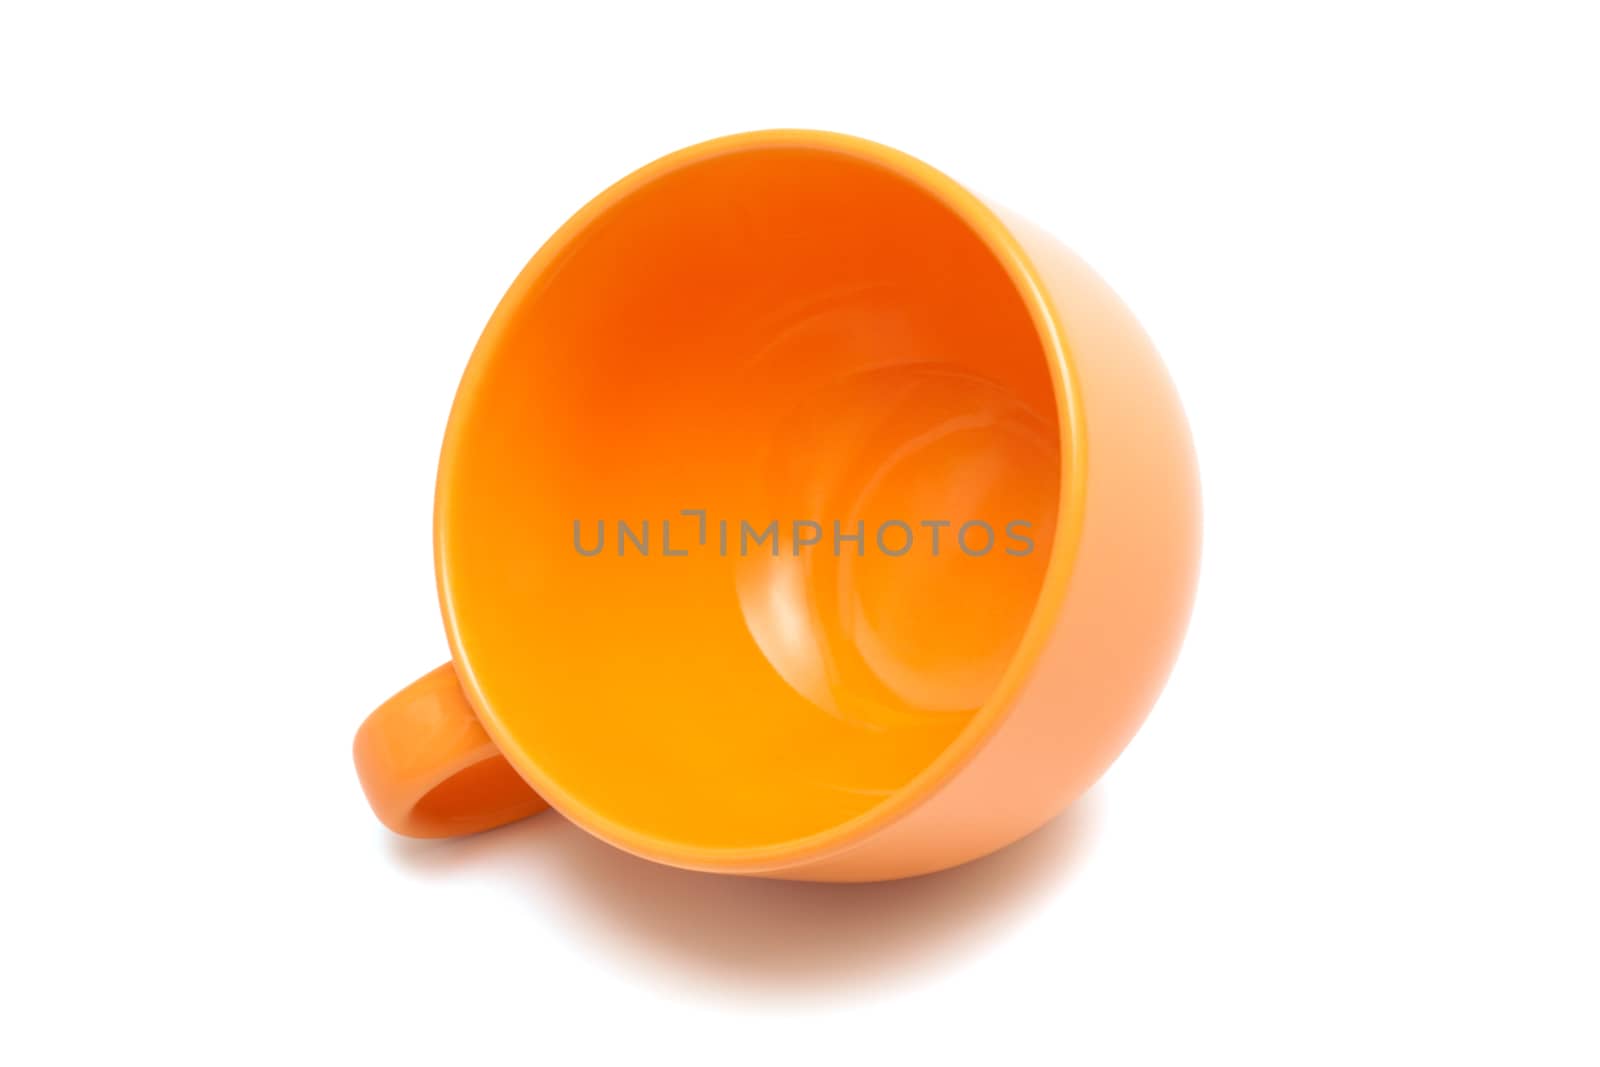 orange cup by terex